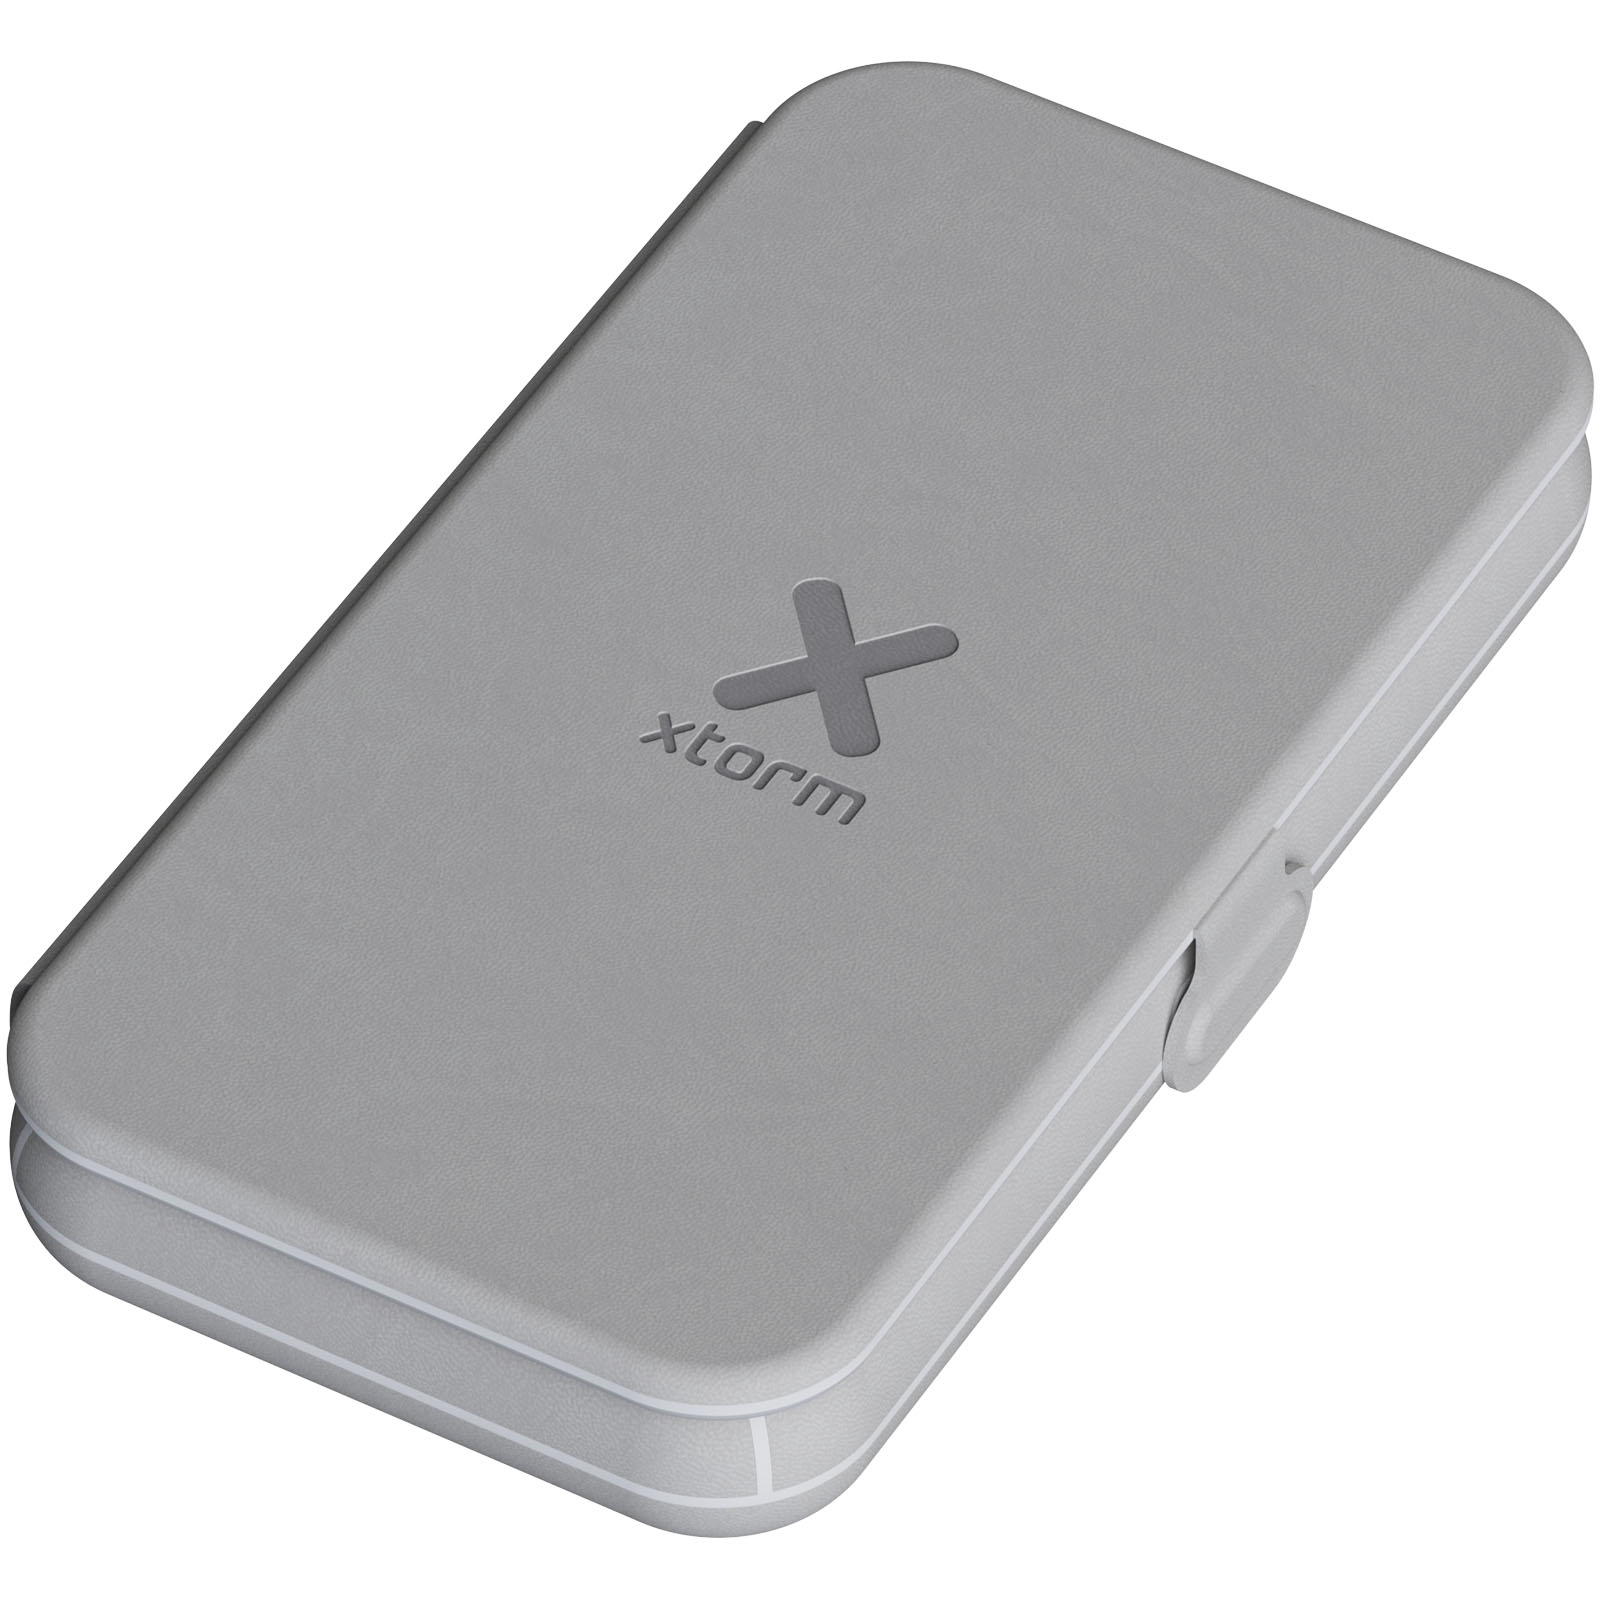 Chargeur de voyage Xtorm XWF31 sans fil 3-en-1 pliable de 15 W